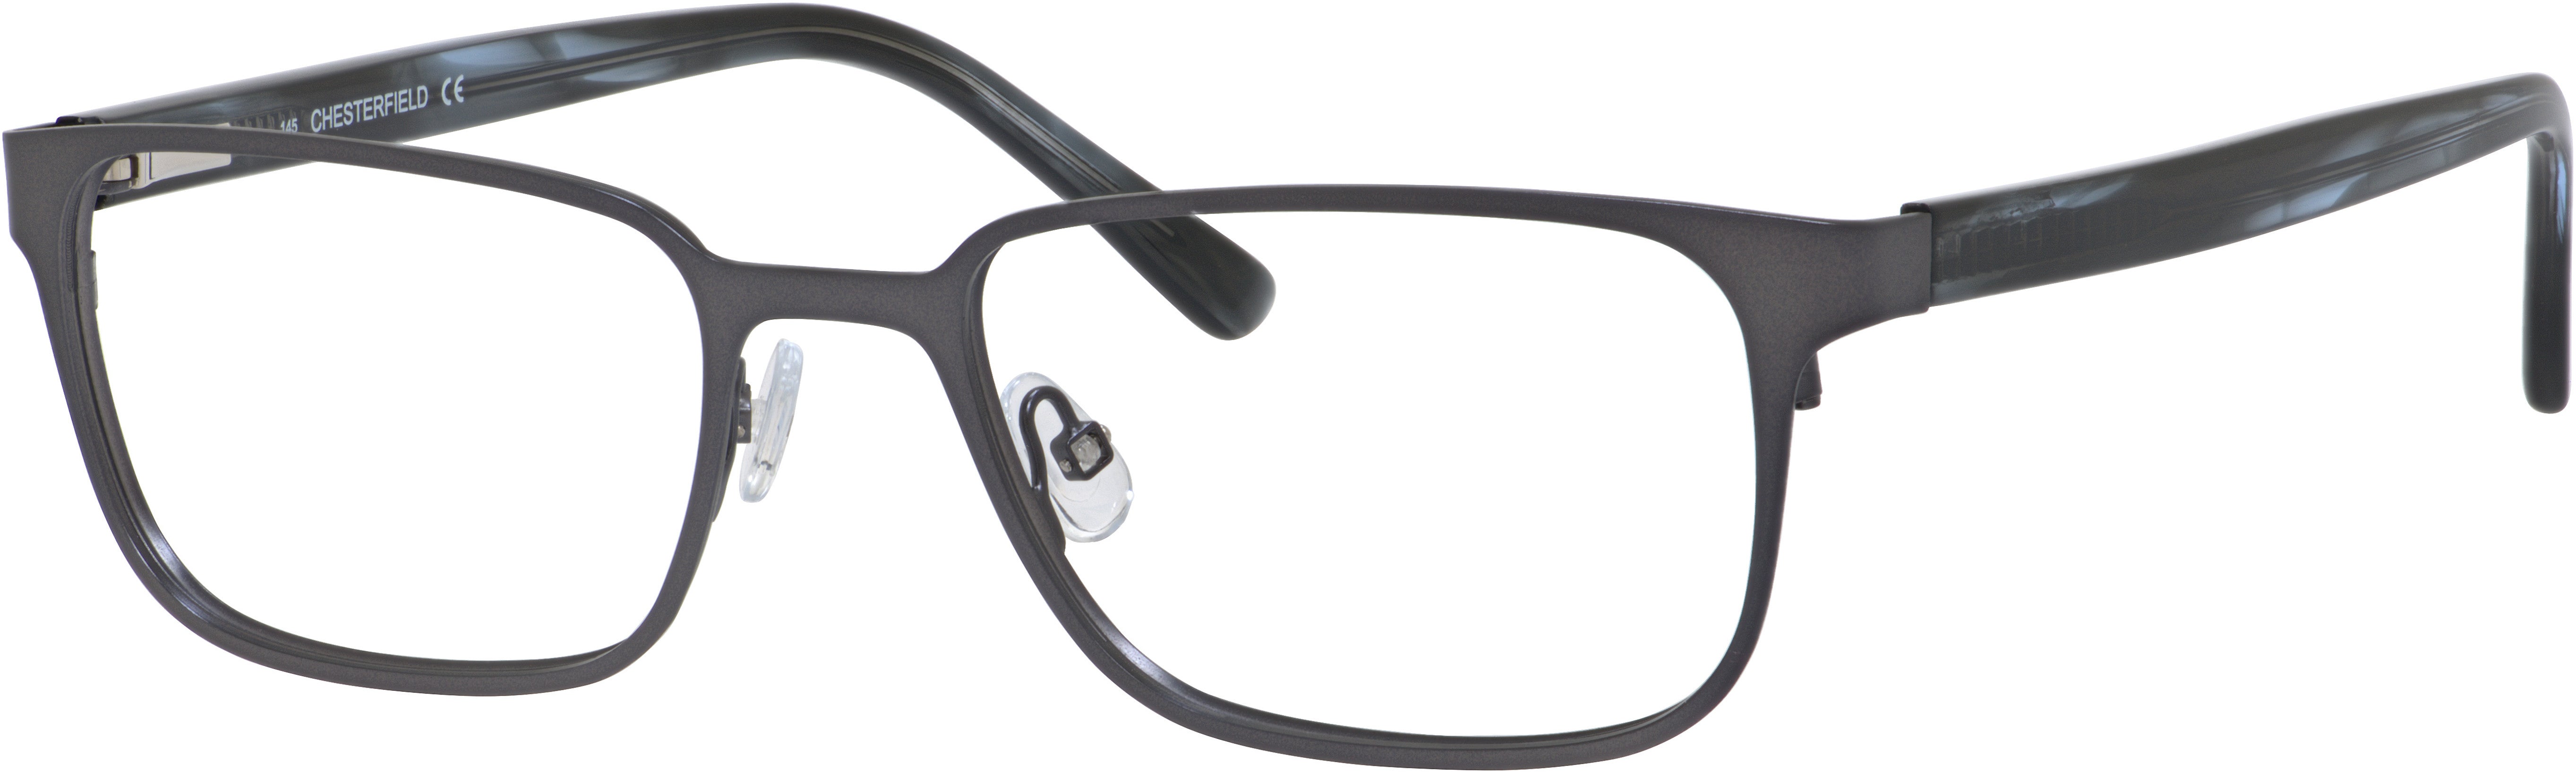  Chesterfield 50/XL Rectangular Eyeglasses 0Y17-0Y17  Matte Slate (00 Demo Lens)